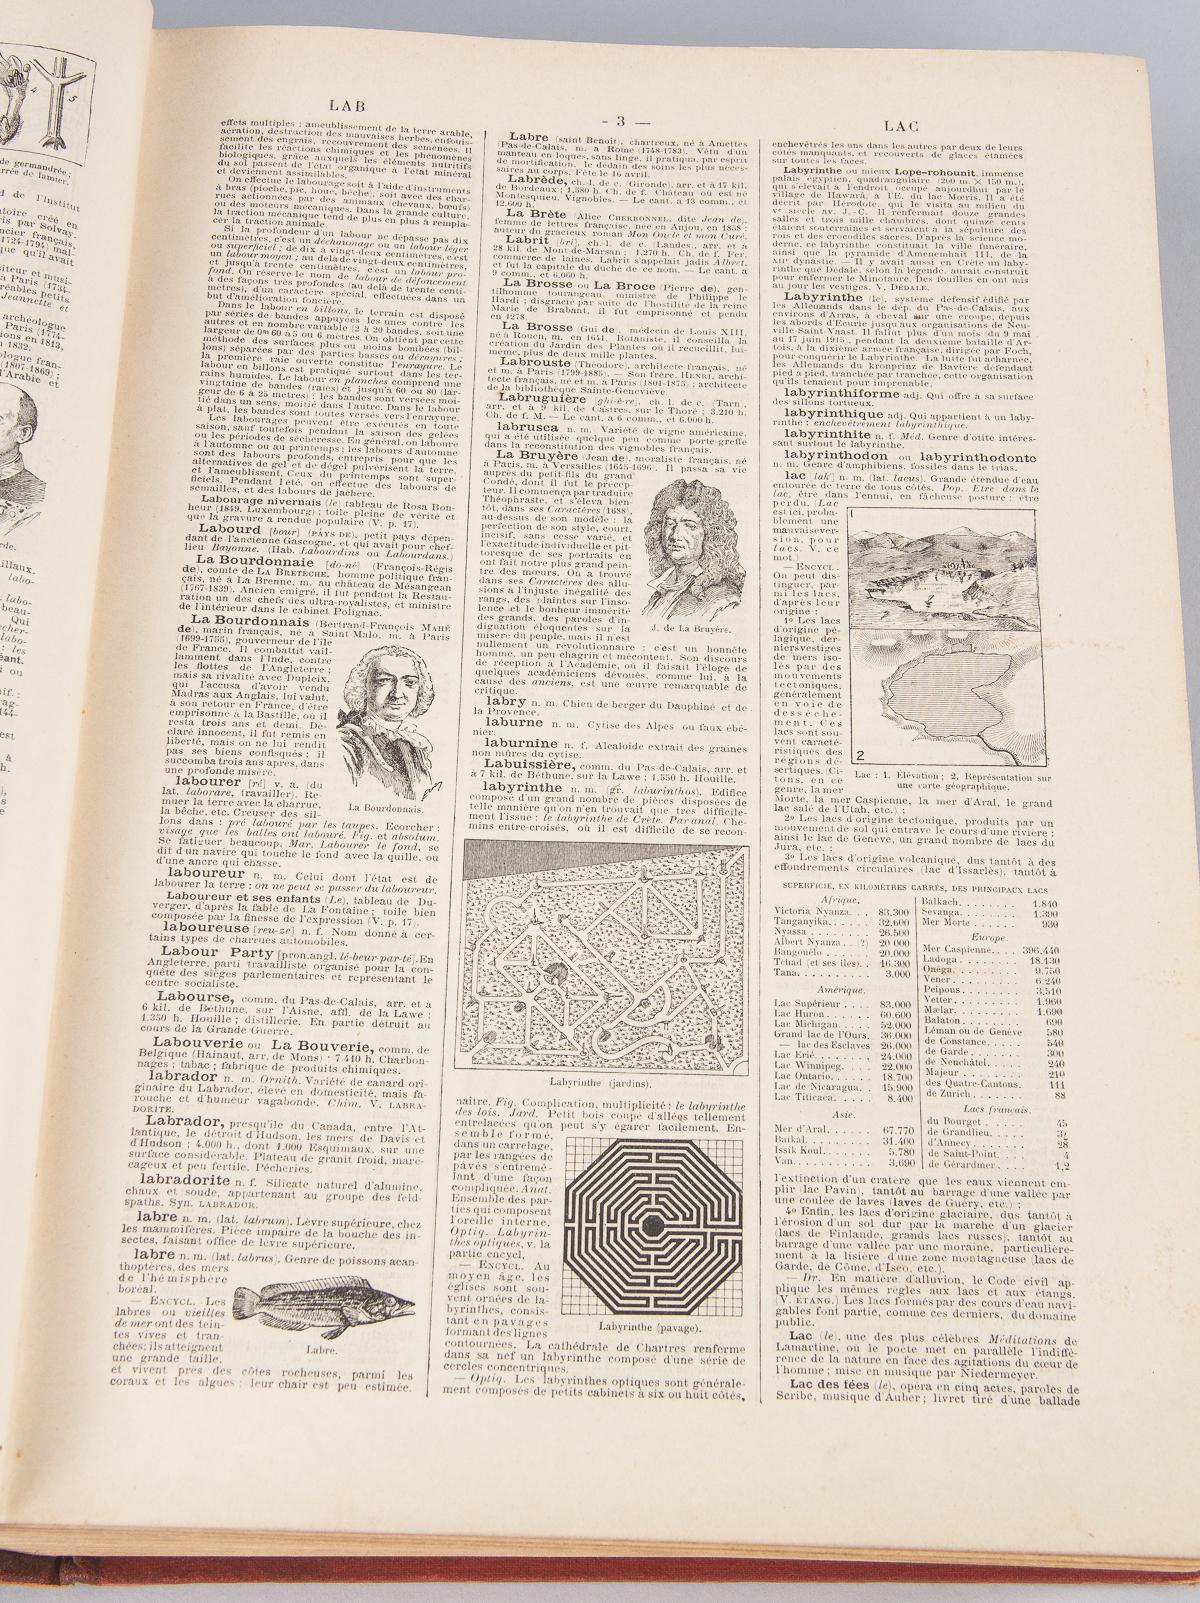 Leather French Encyclopedia Books, Larousse Universel, 1922